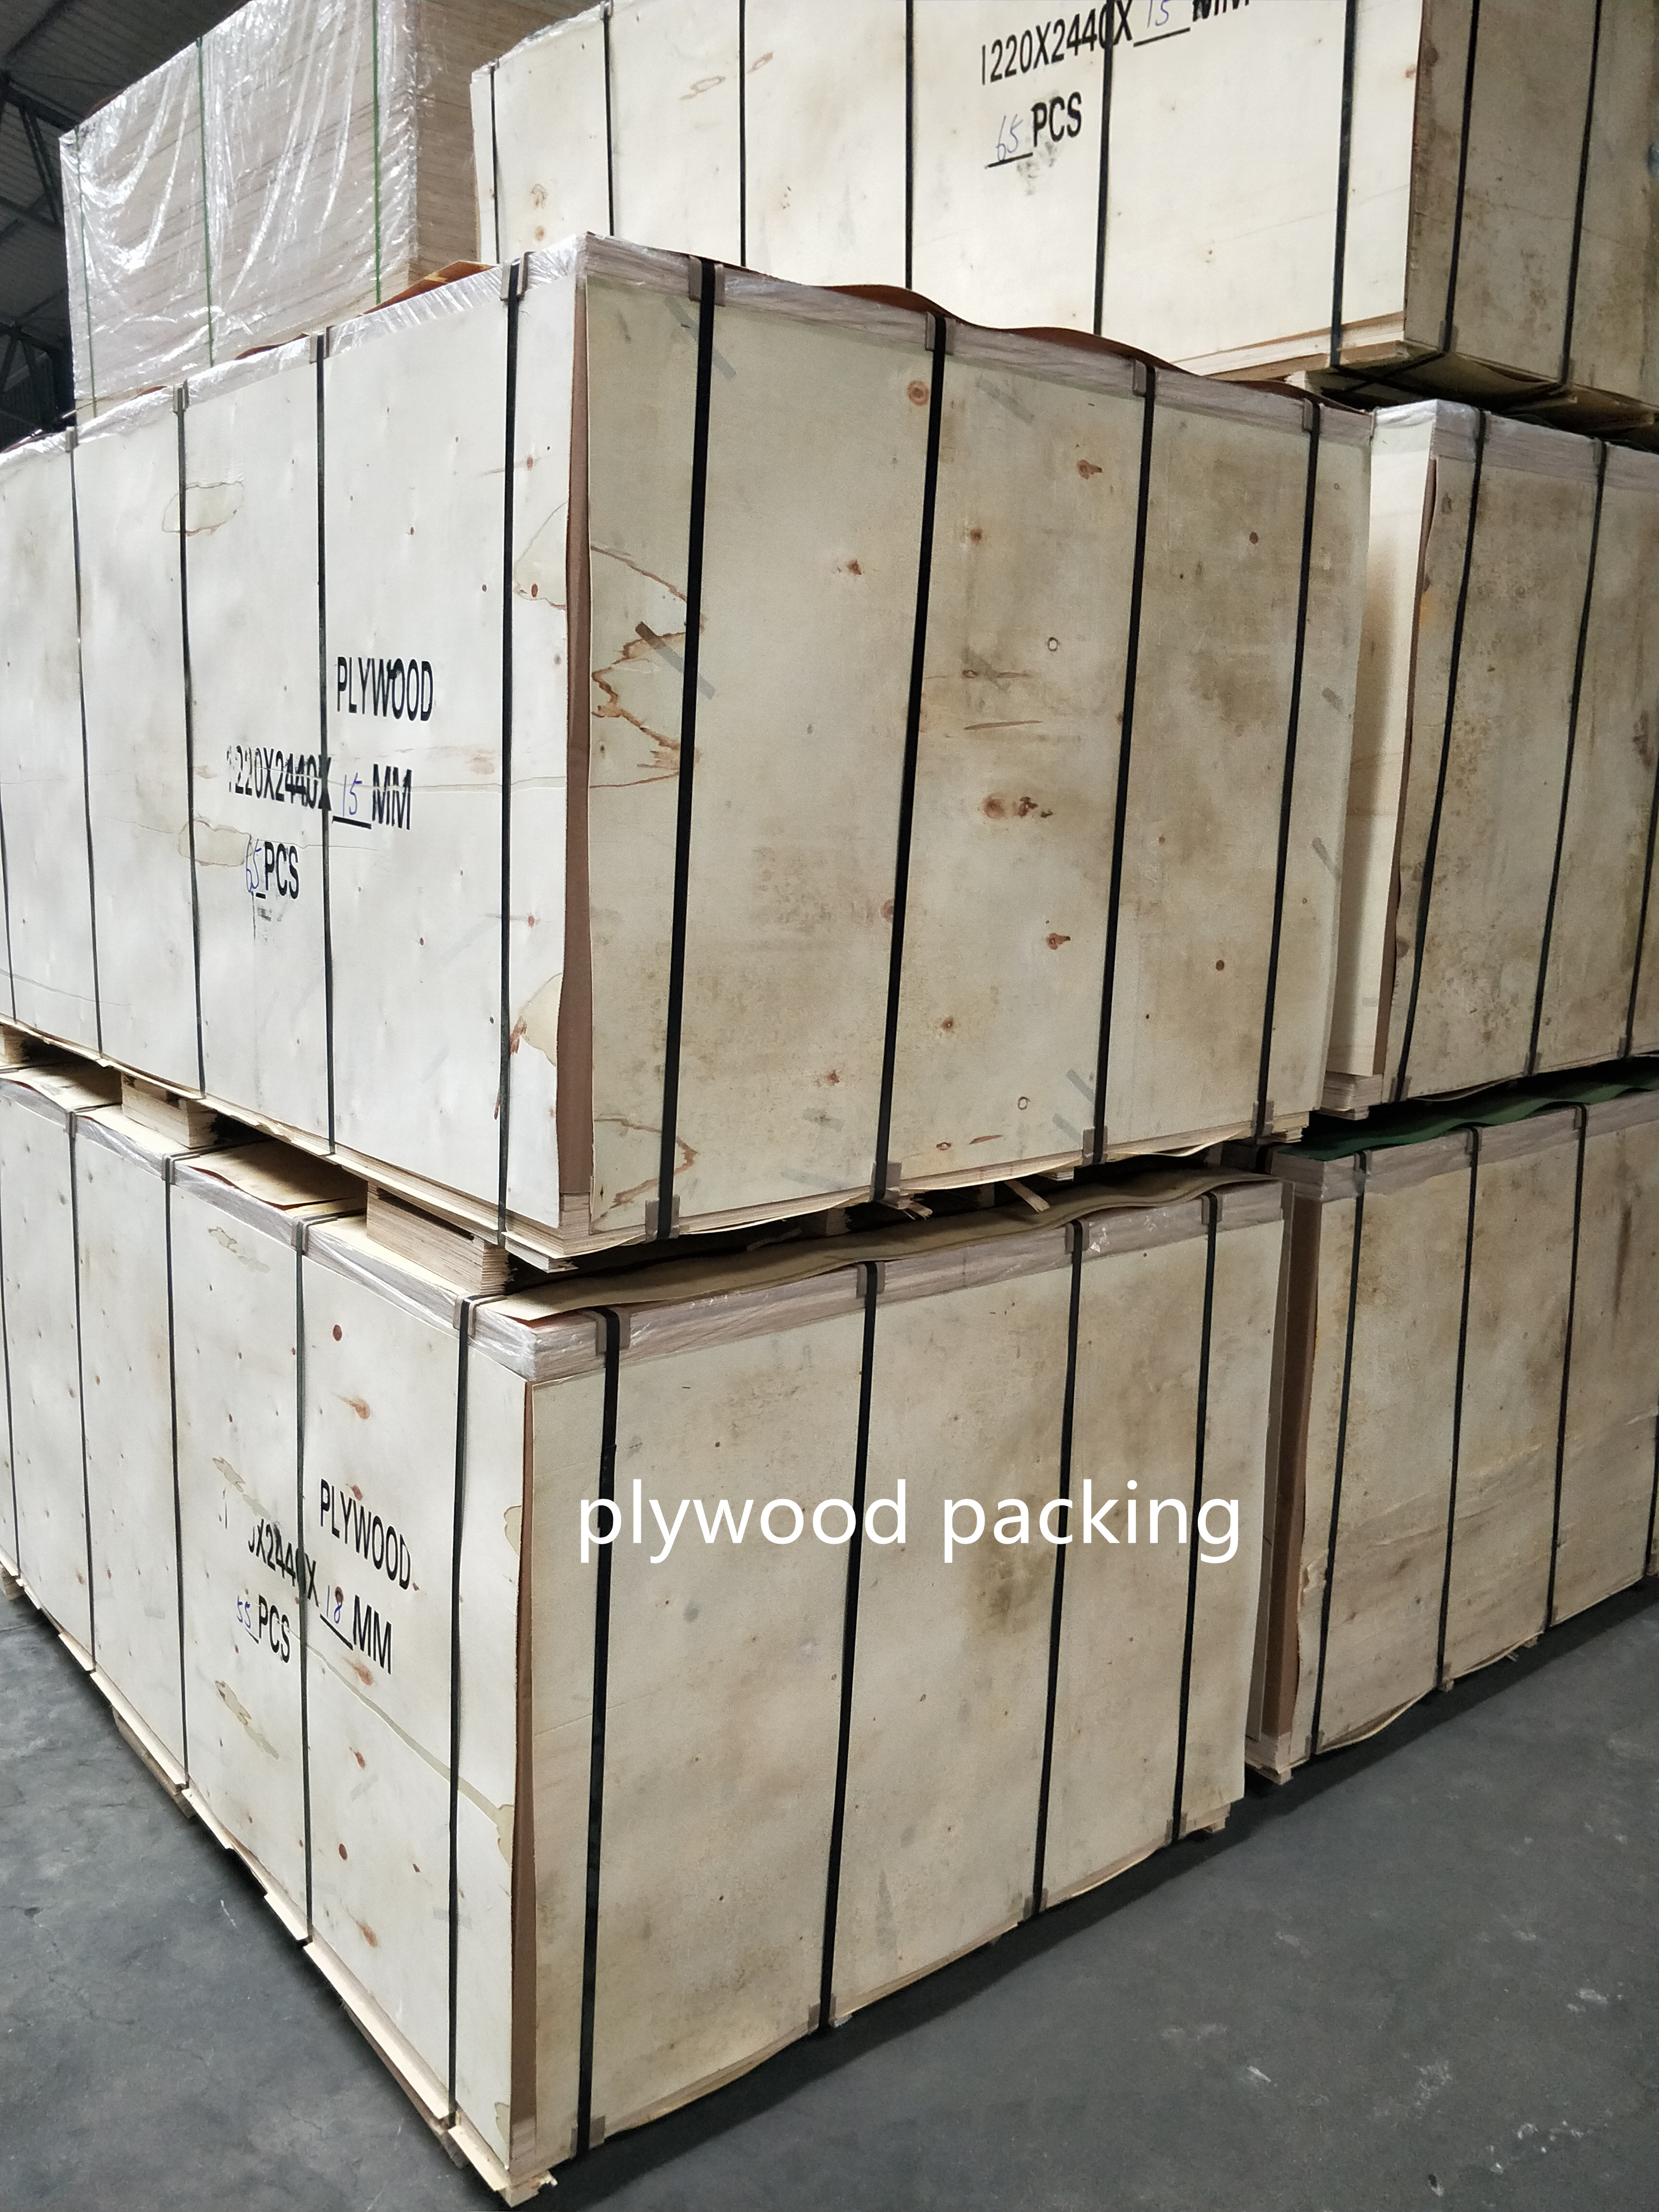 Film faced plywood with hardwood core combi core poplar core(图6)